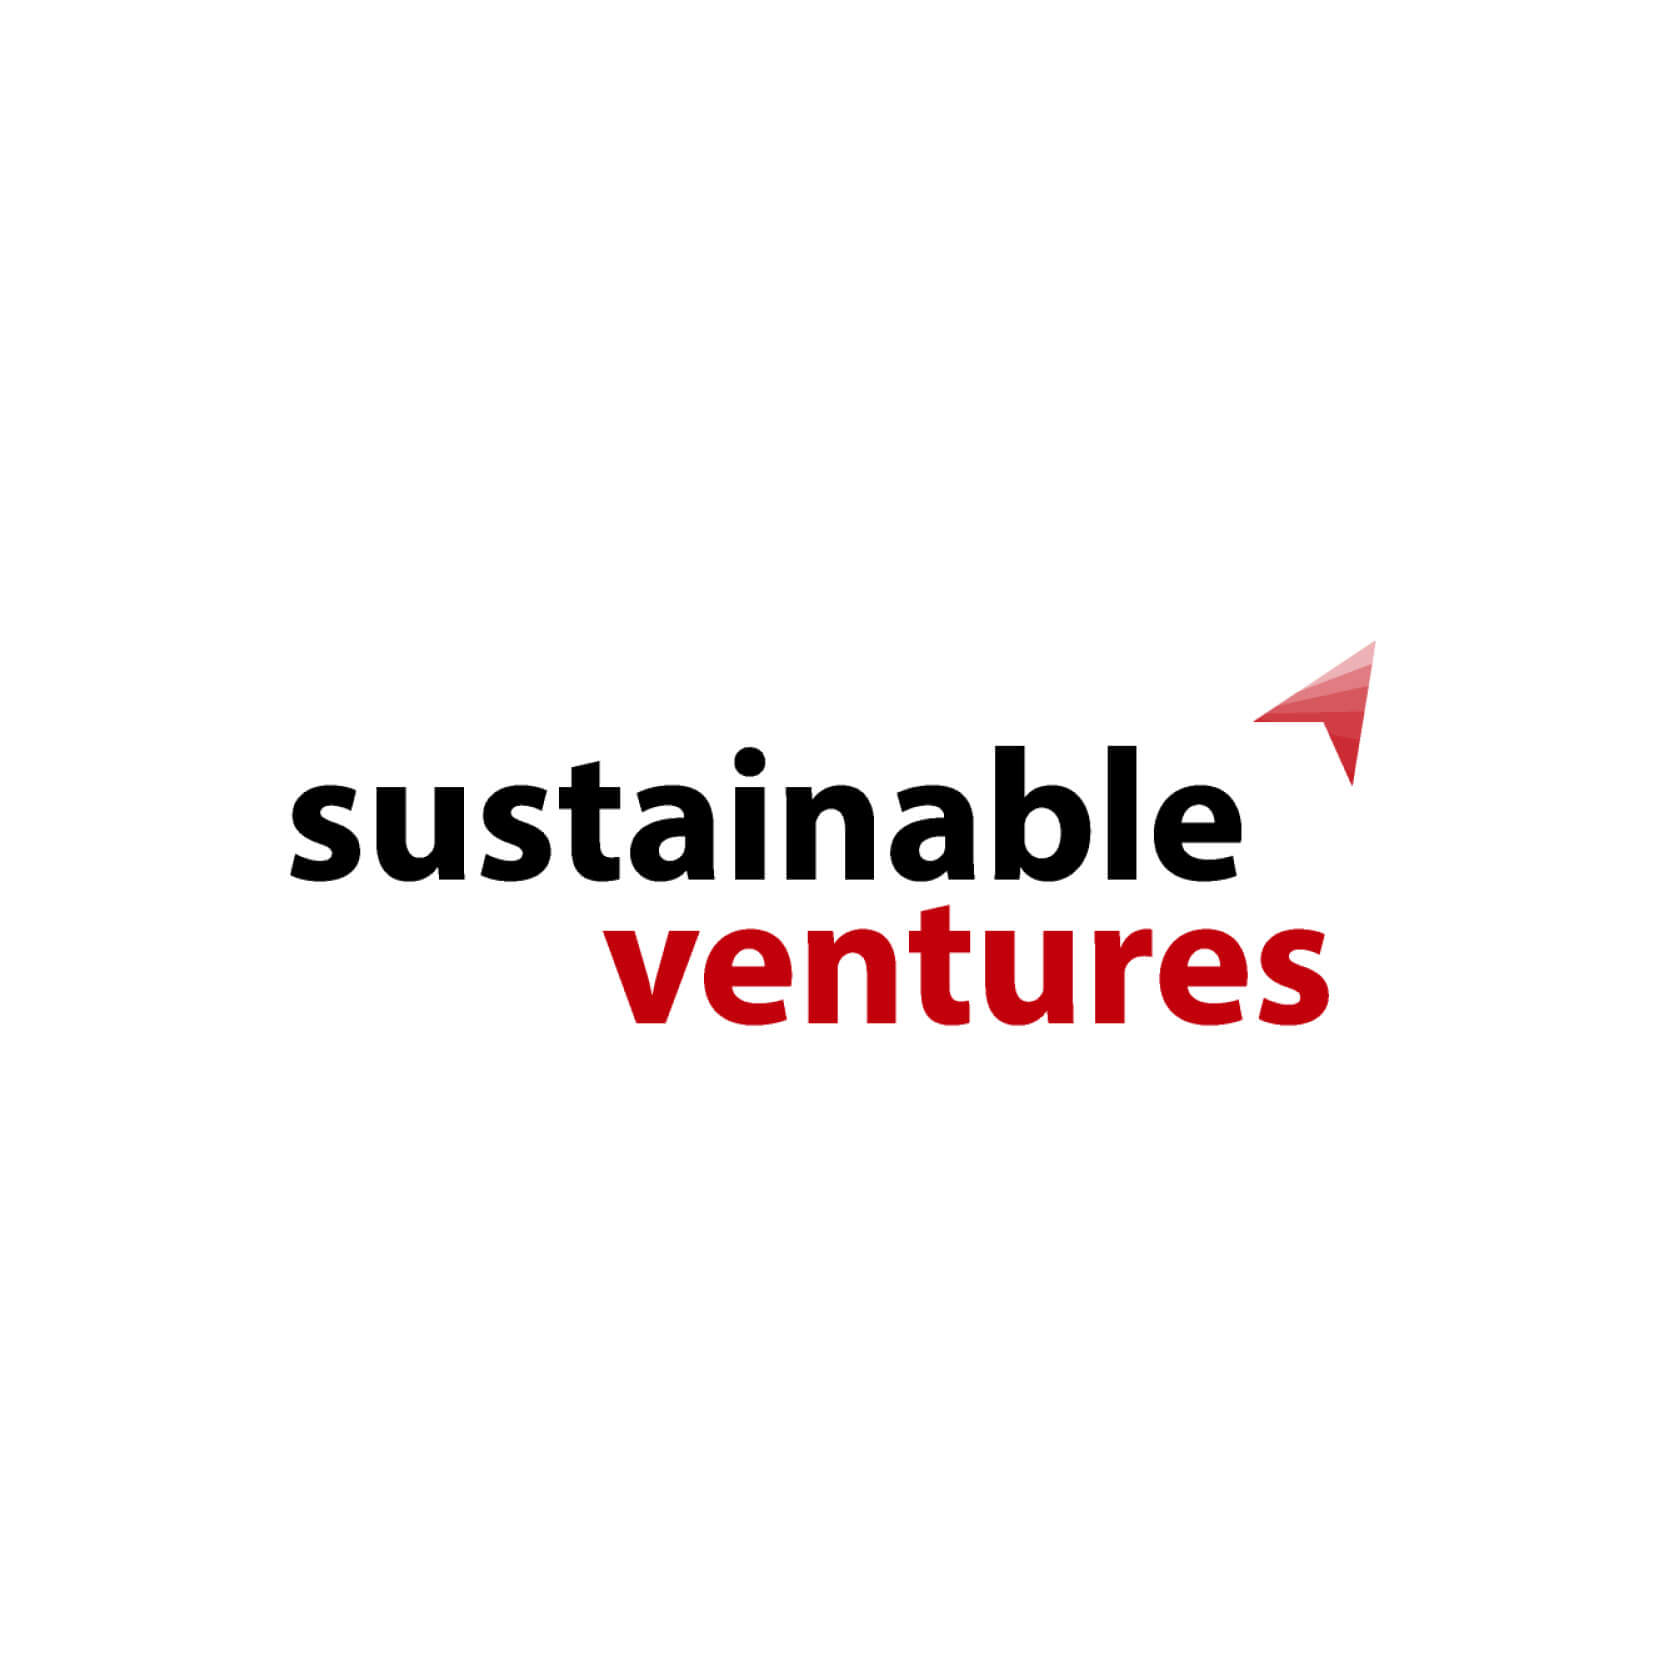 Sustainable Ventures logo